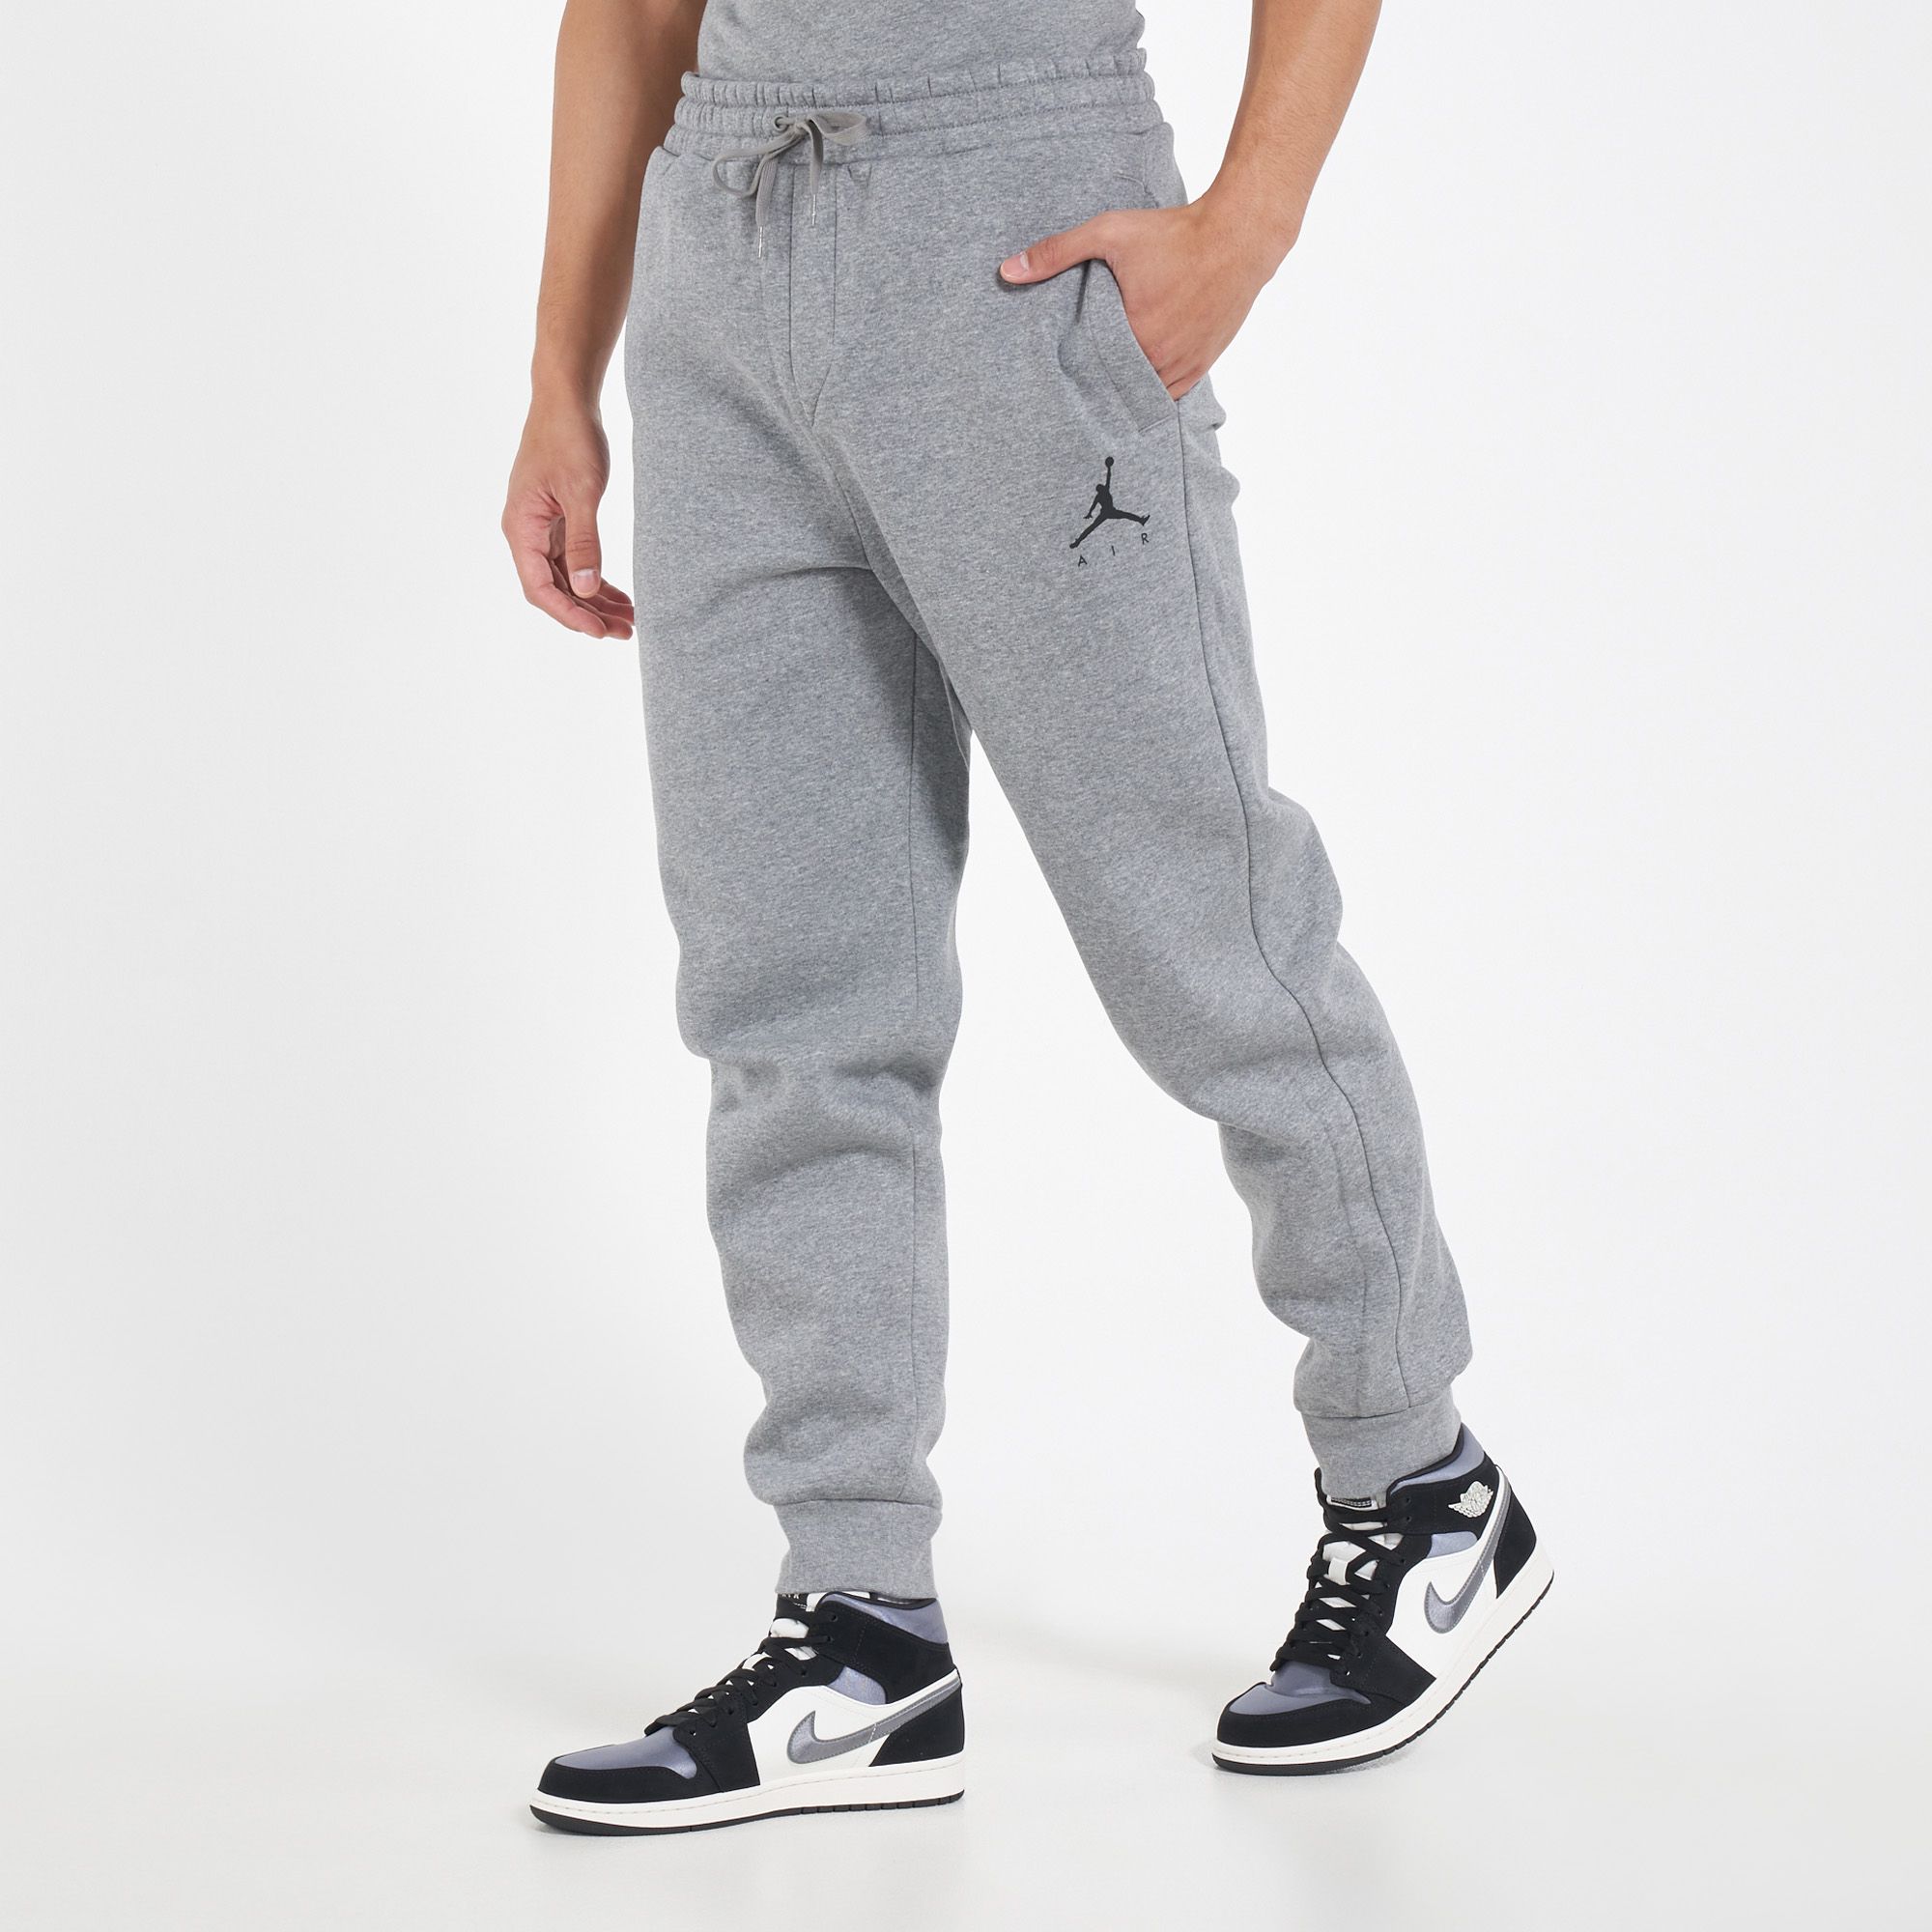 jordan grey track pants